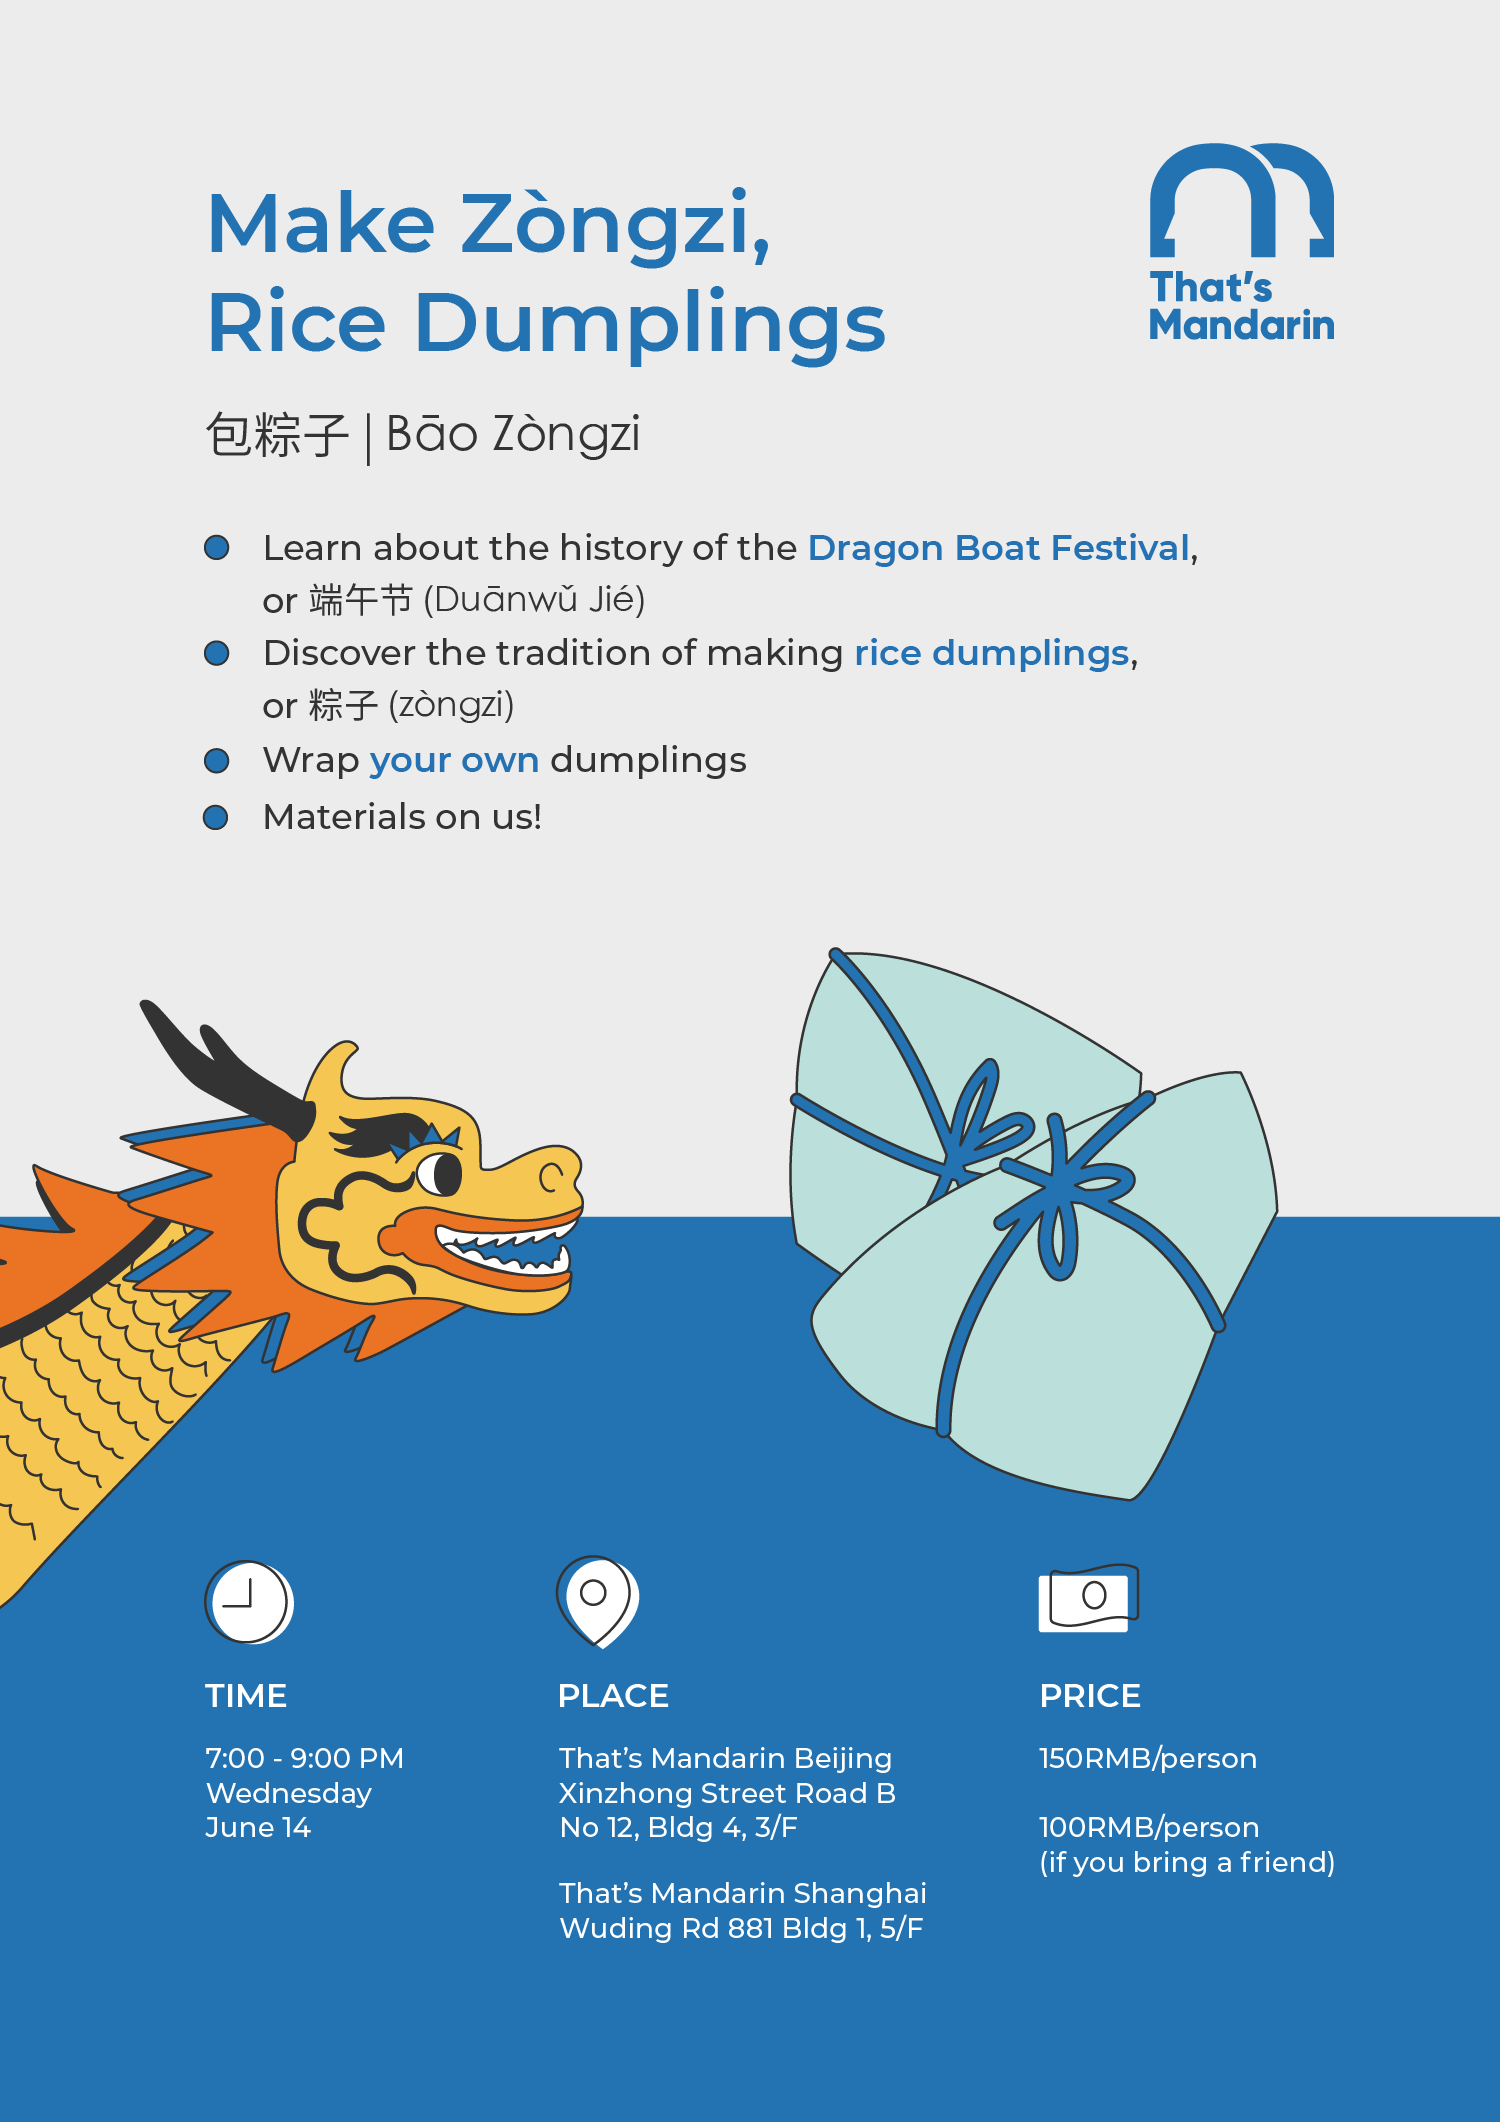 June 14: Make Zongzi, Rice Dumplings